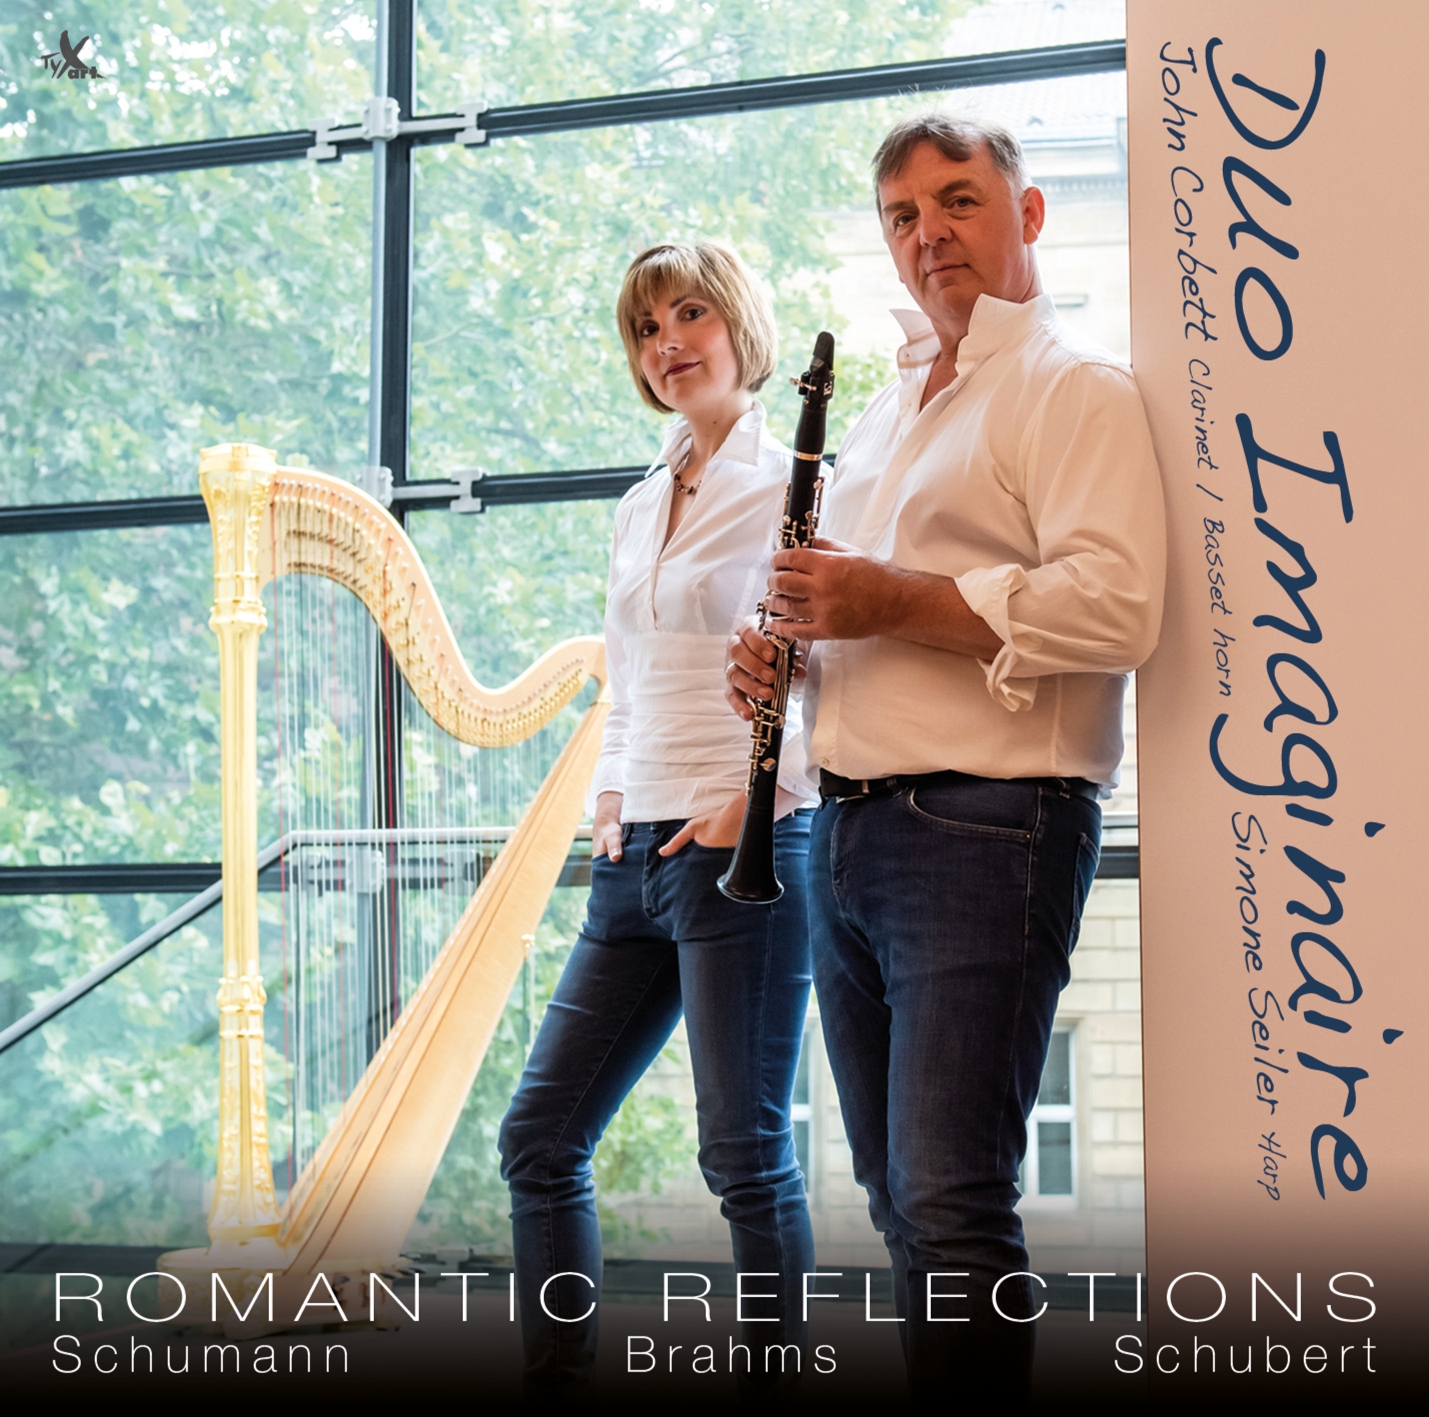 Romantic Reflections - Schumann Brahms Schubert - Duo Imaginaire